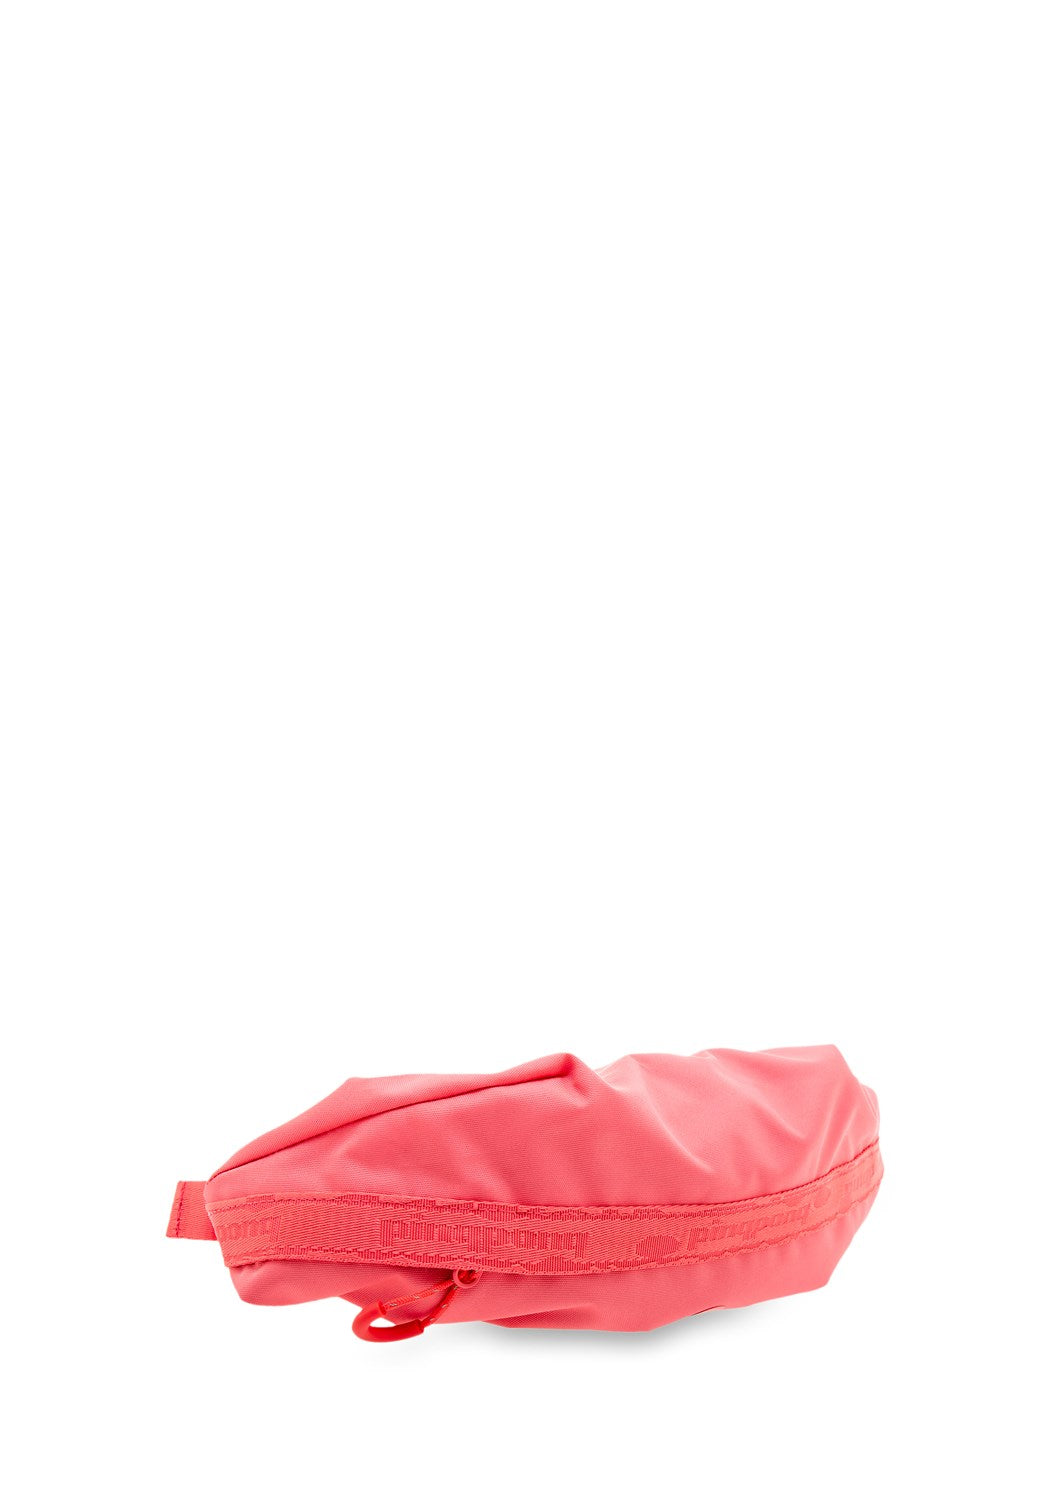 PPC-HPB-001-40140 Brik watermelon pink | Bildmaterial bereitgestellt von SHOES.PLEASE.